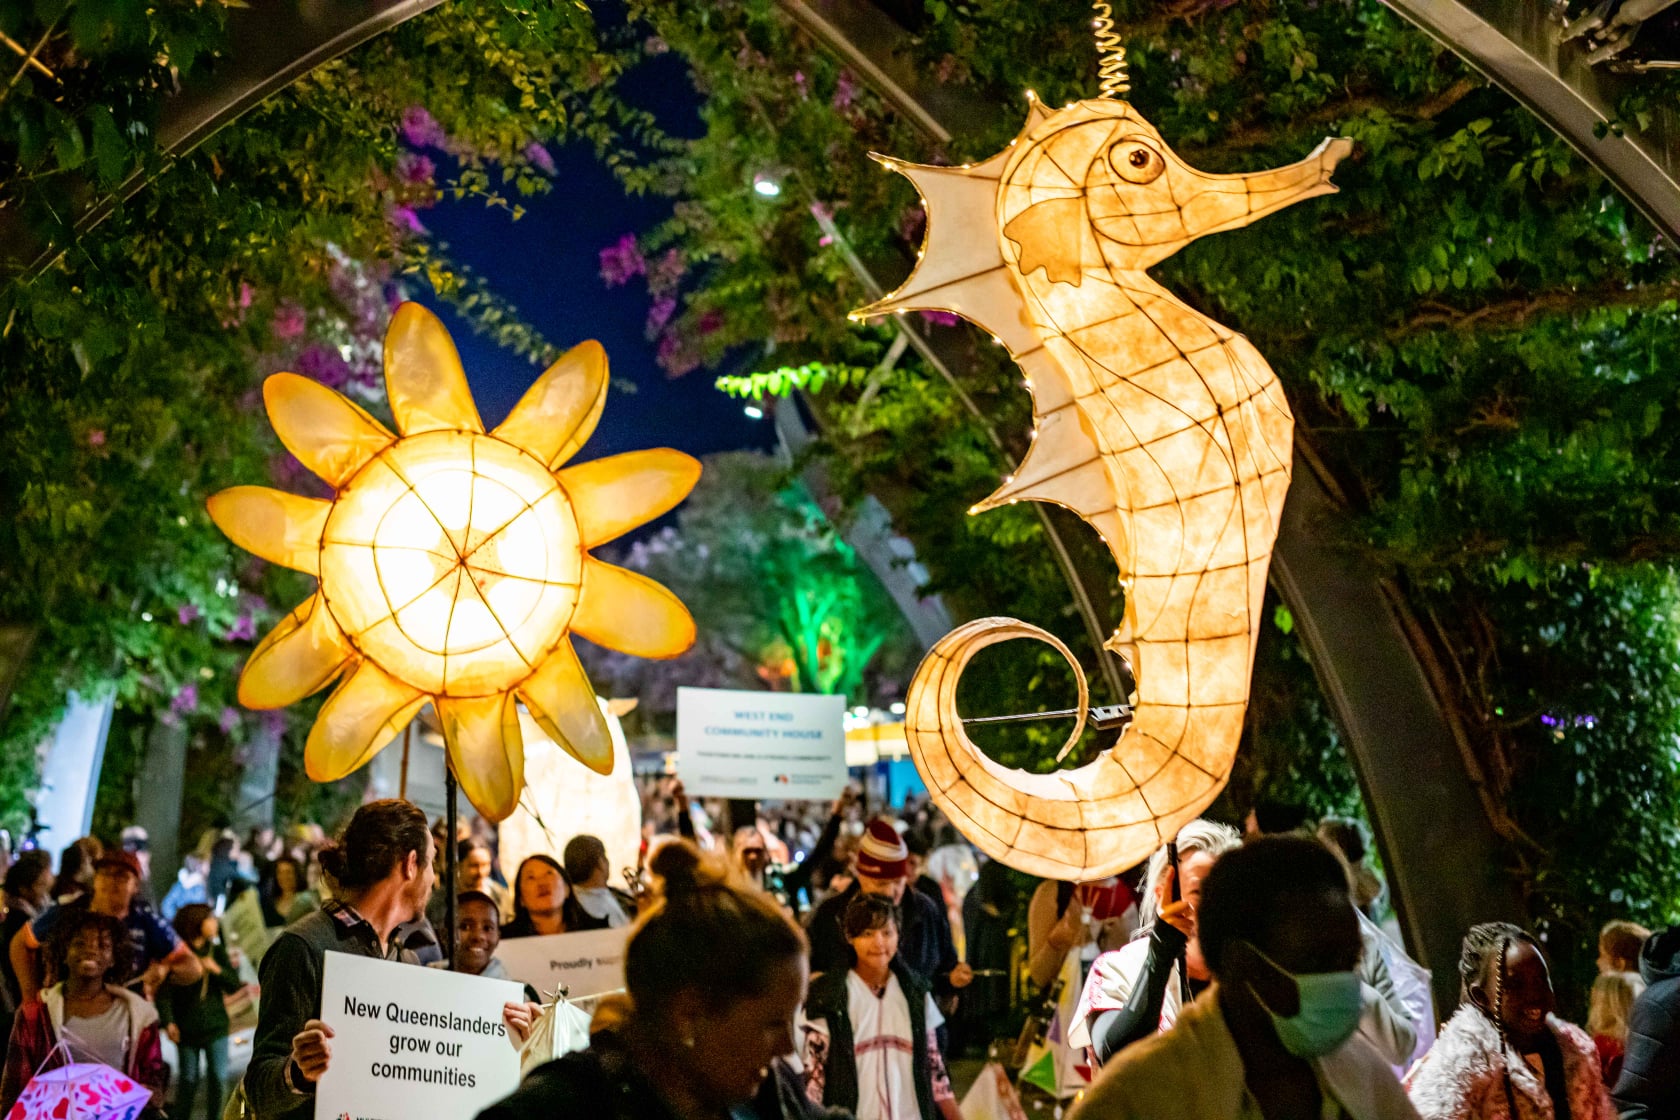 a parade at night with animals lanterns